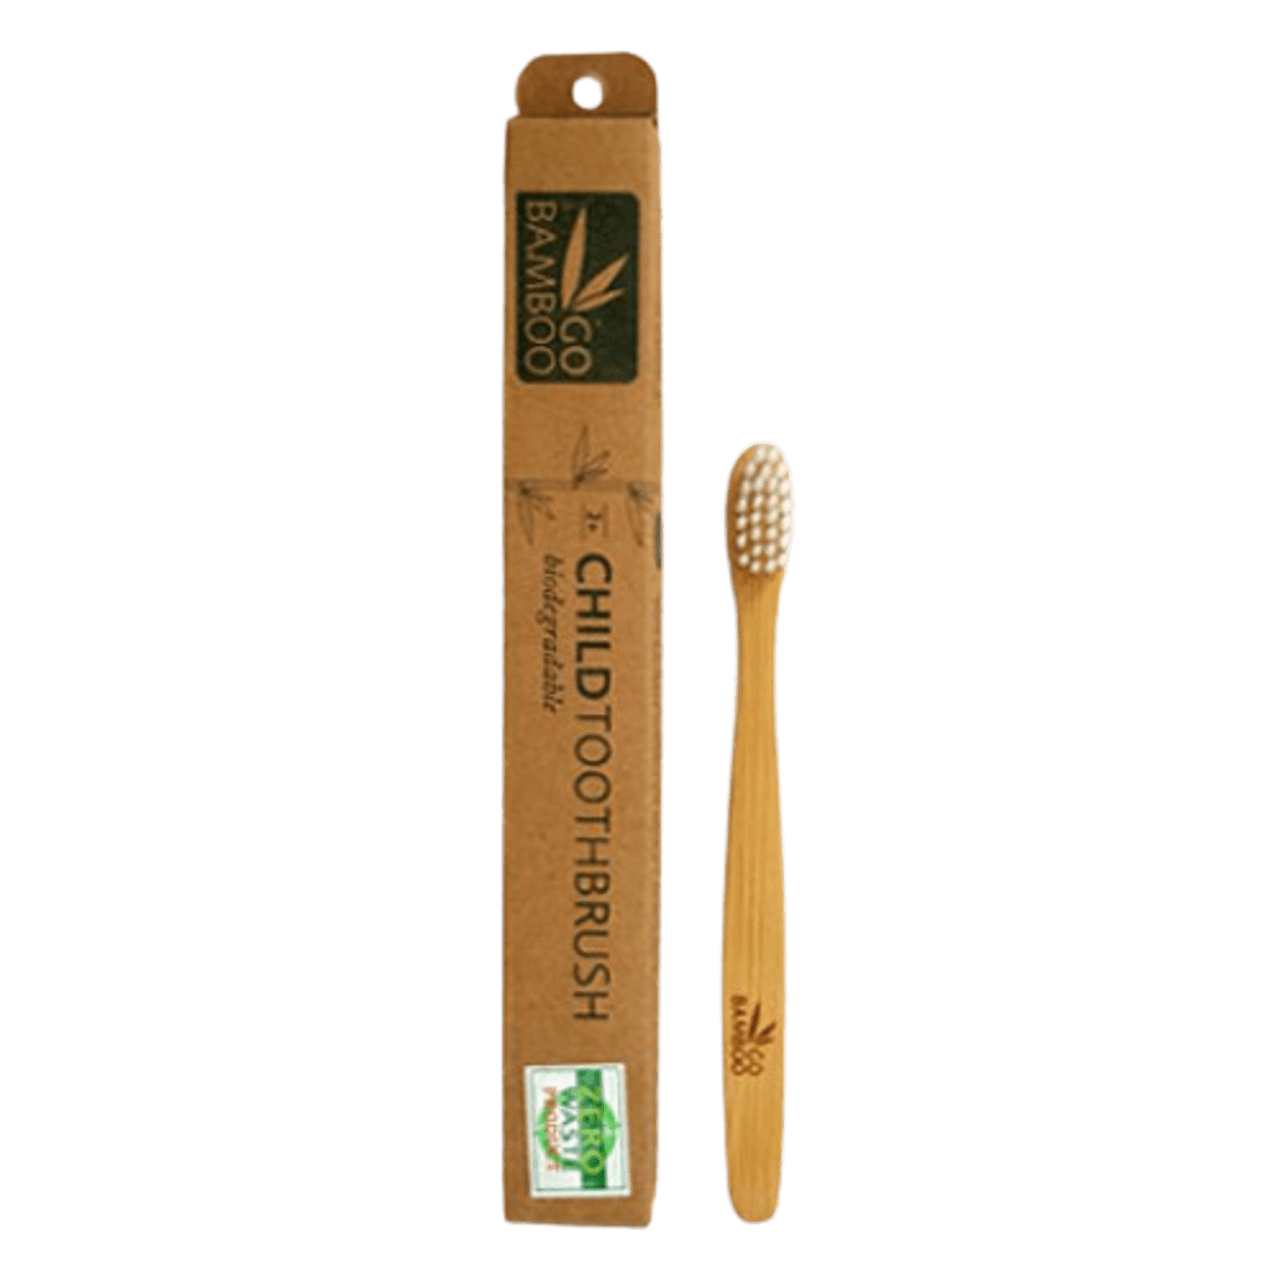 Go Bamboo Biodegradable Toothbrush - Child - #shop_name - -Prana Wholefoods